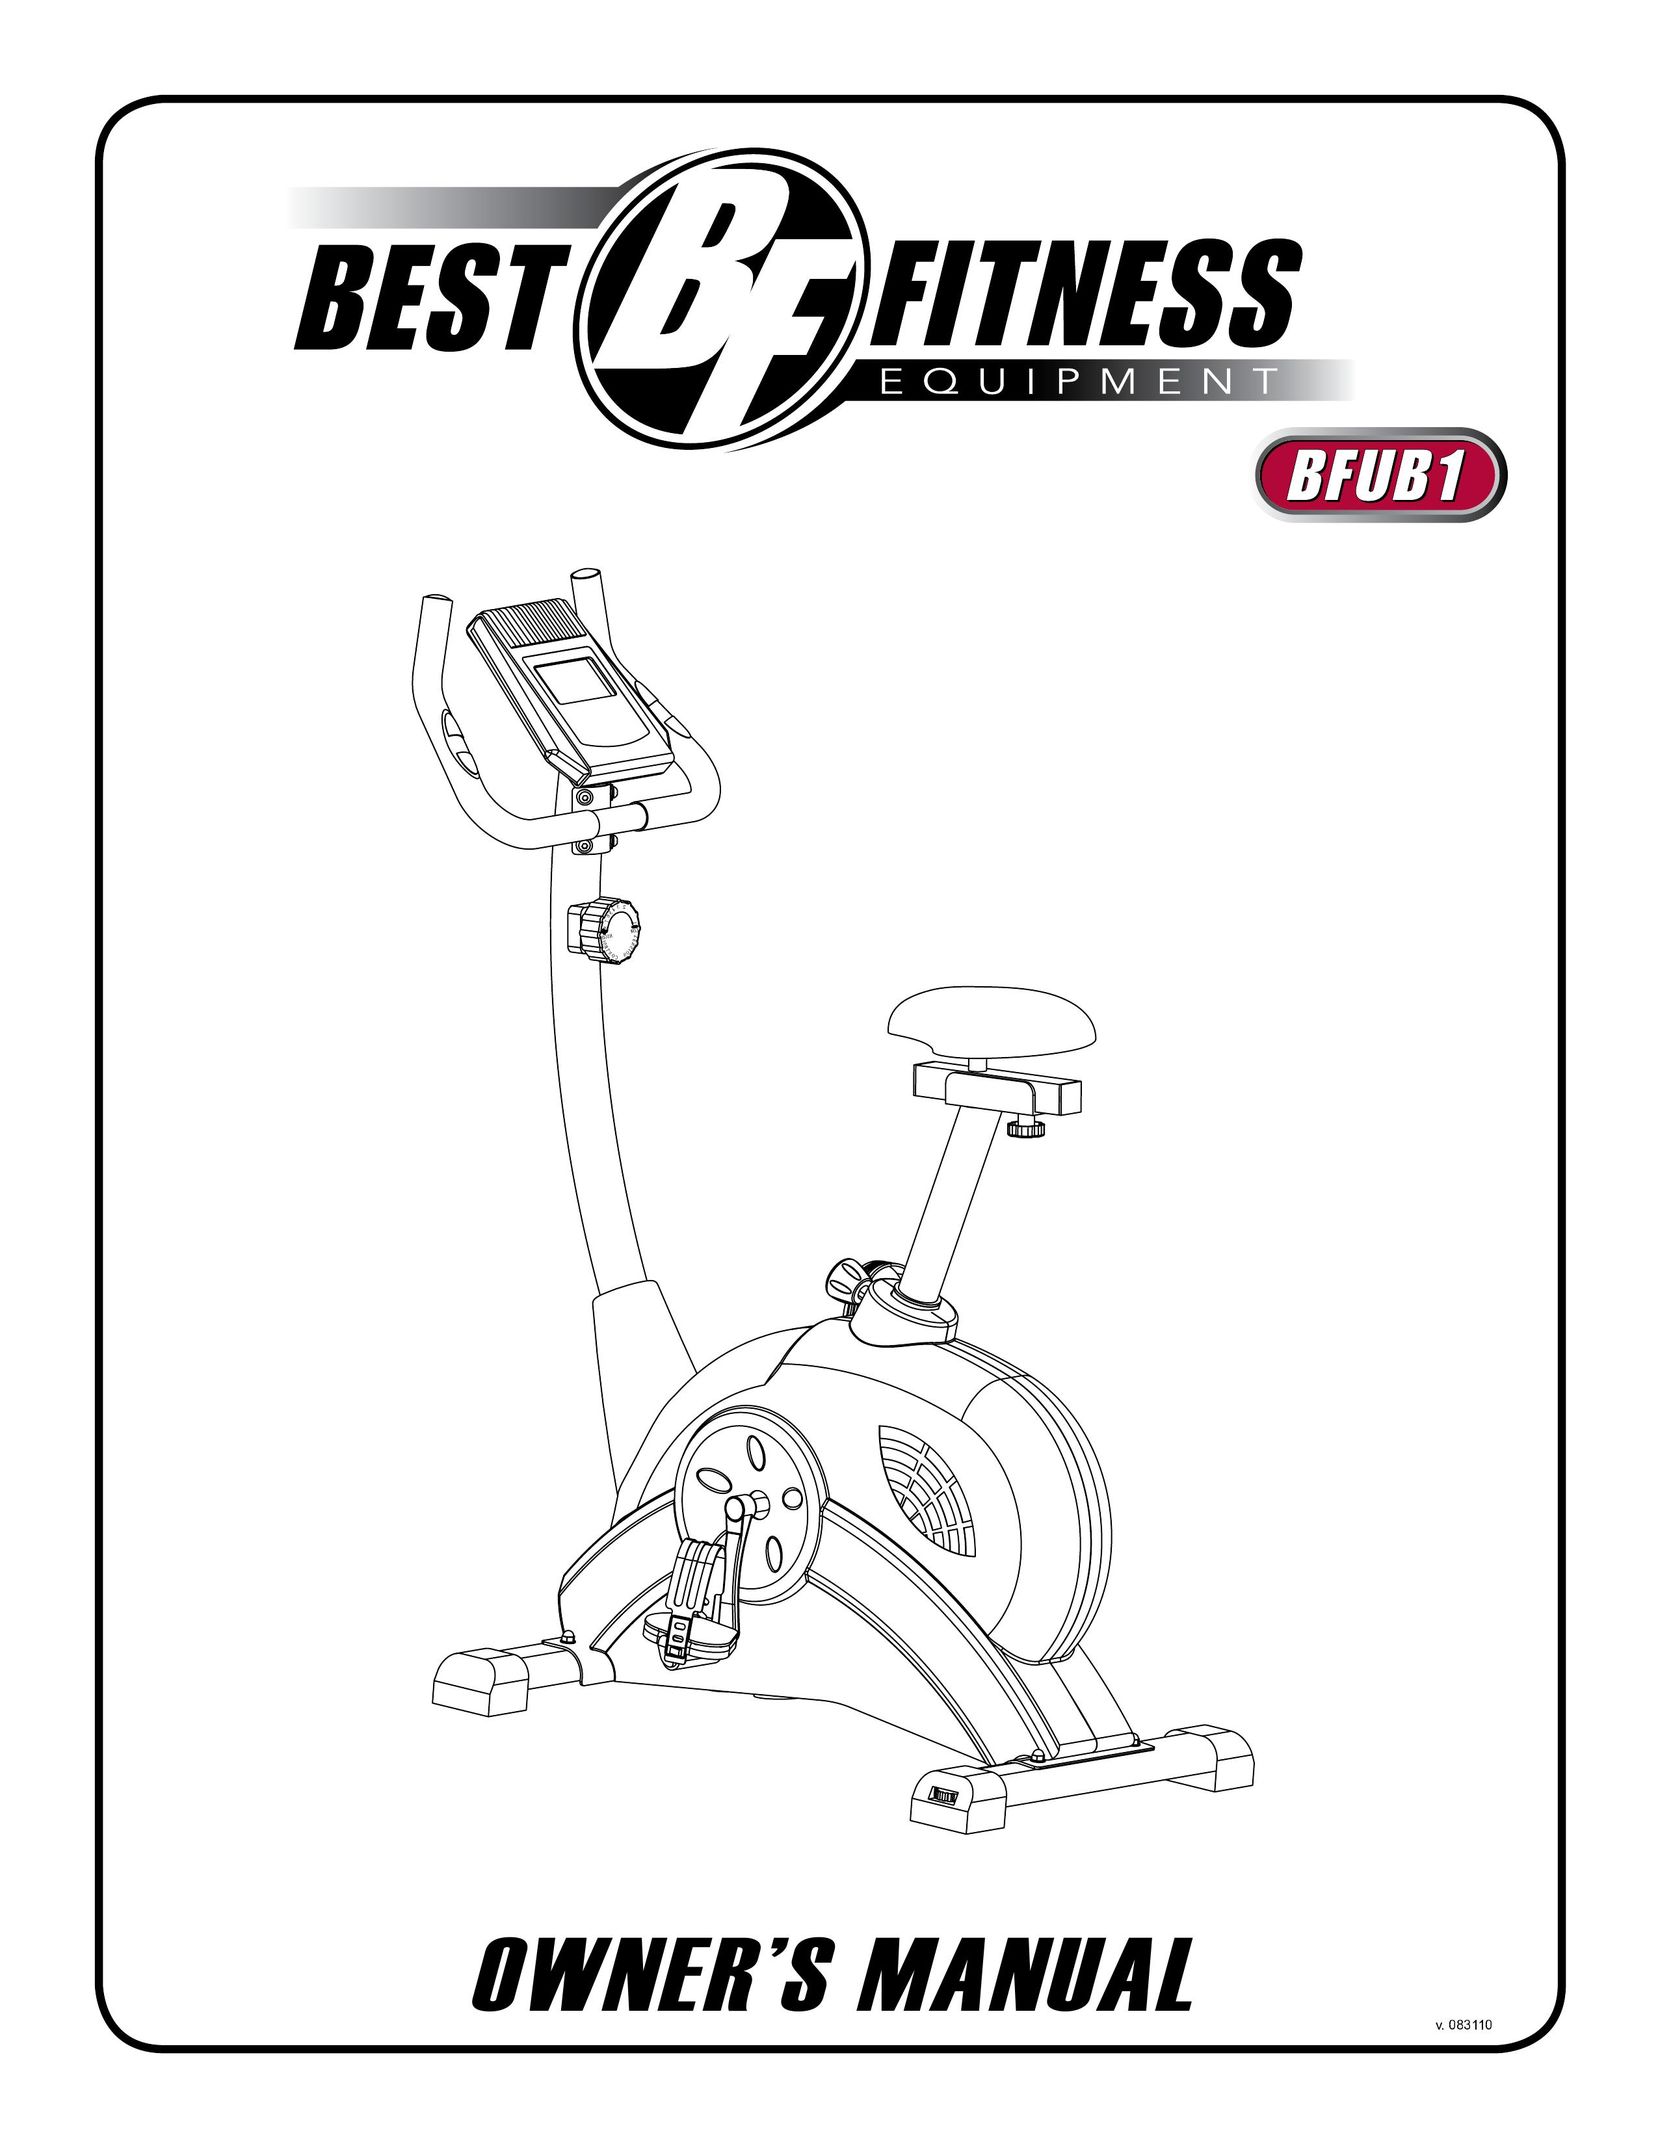 Best Fitness BFUB1 Exercise Bike User Manual